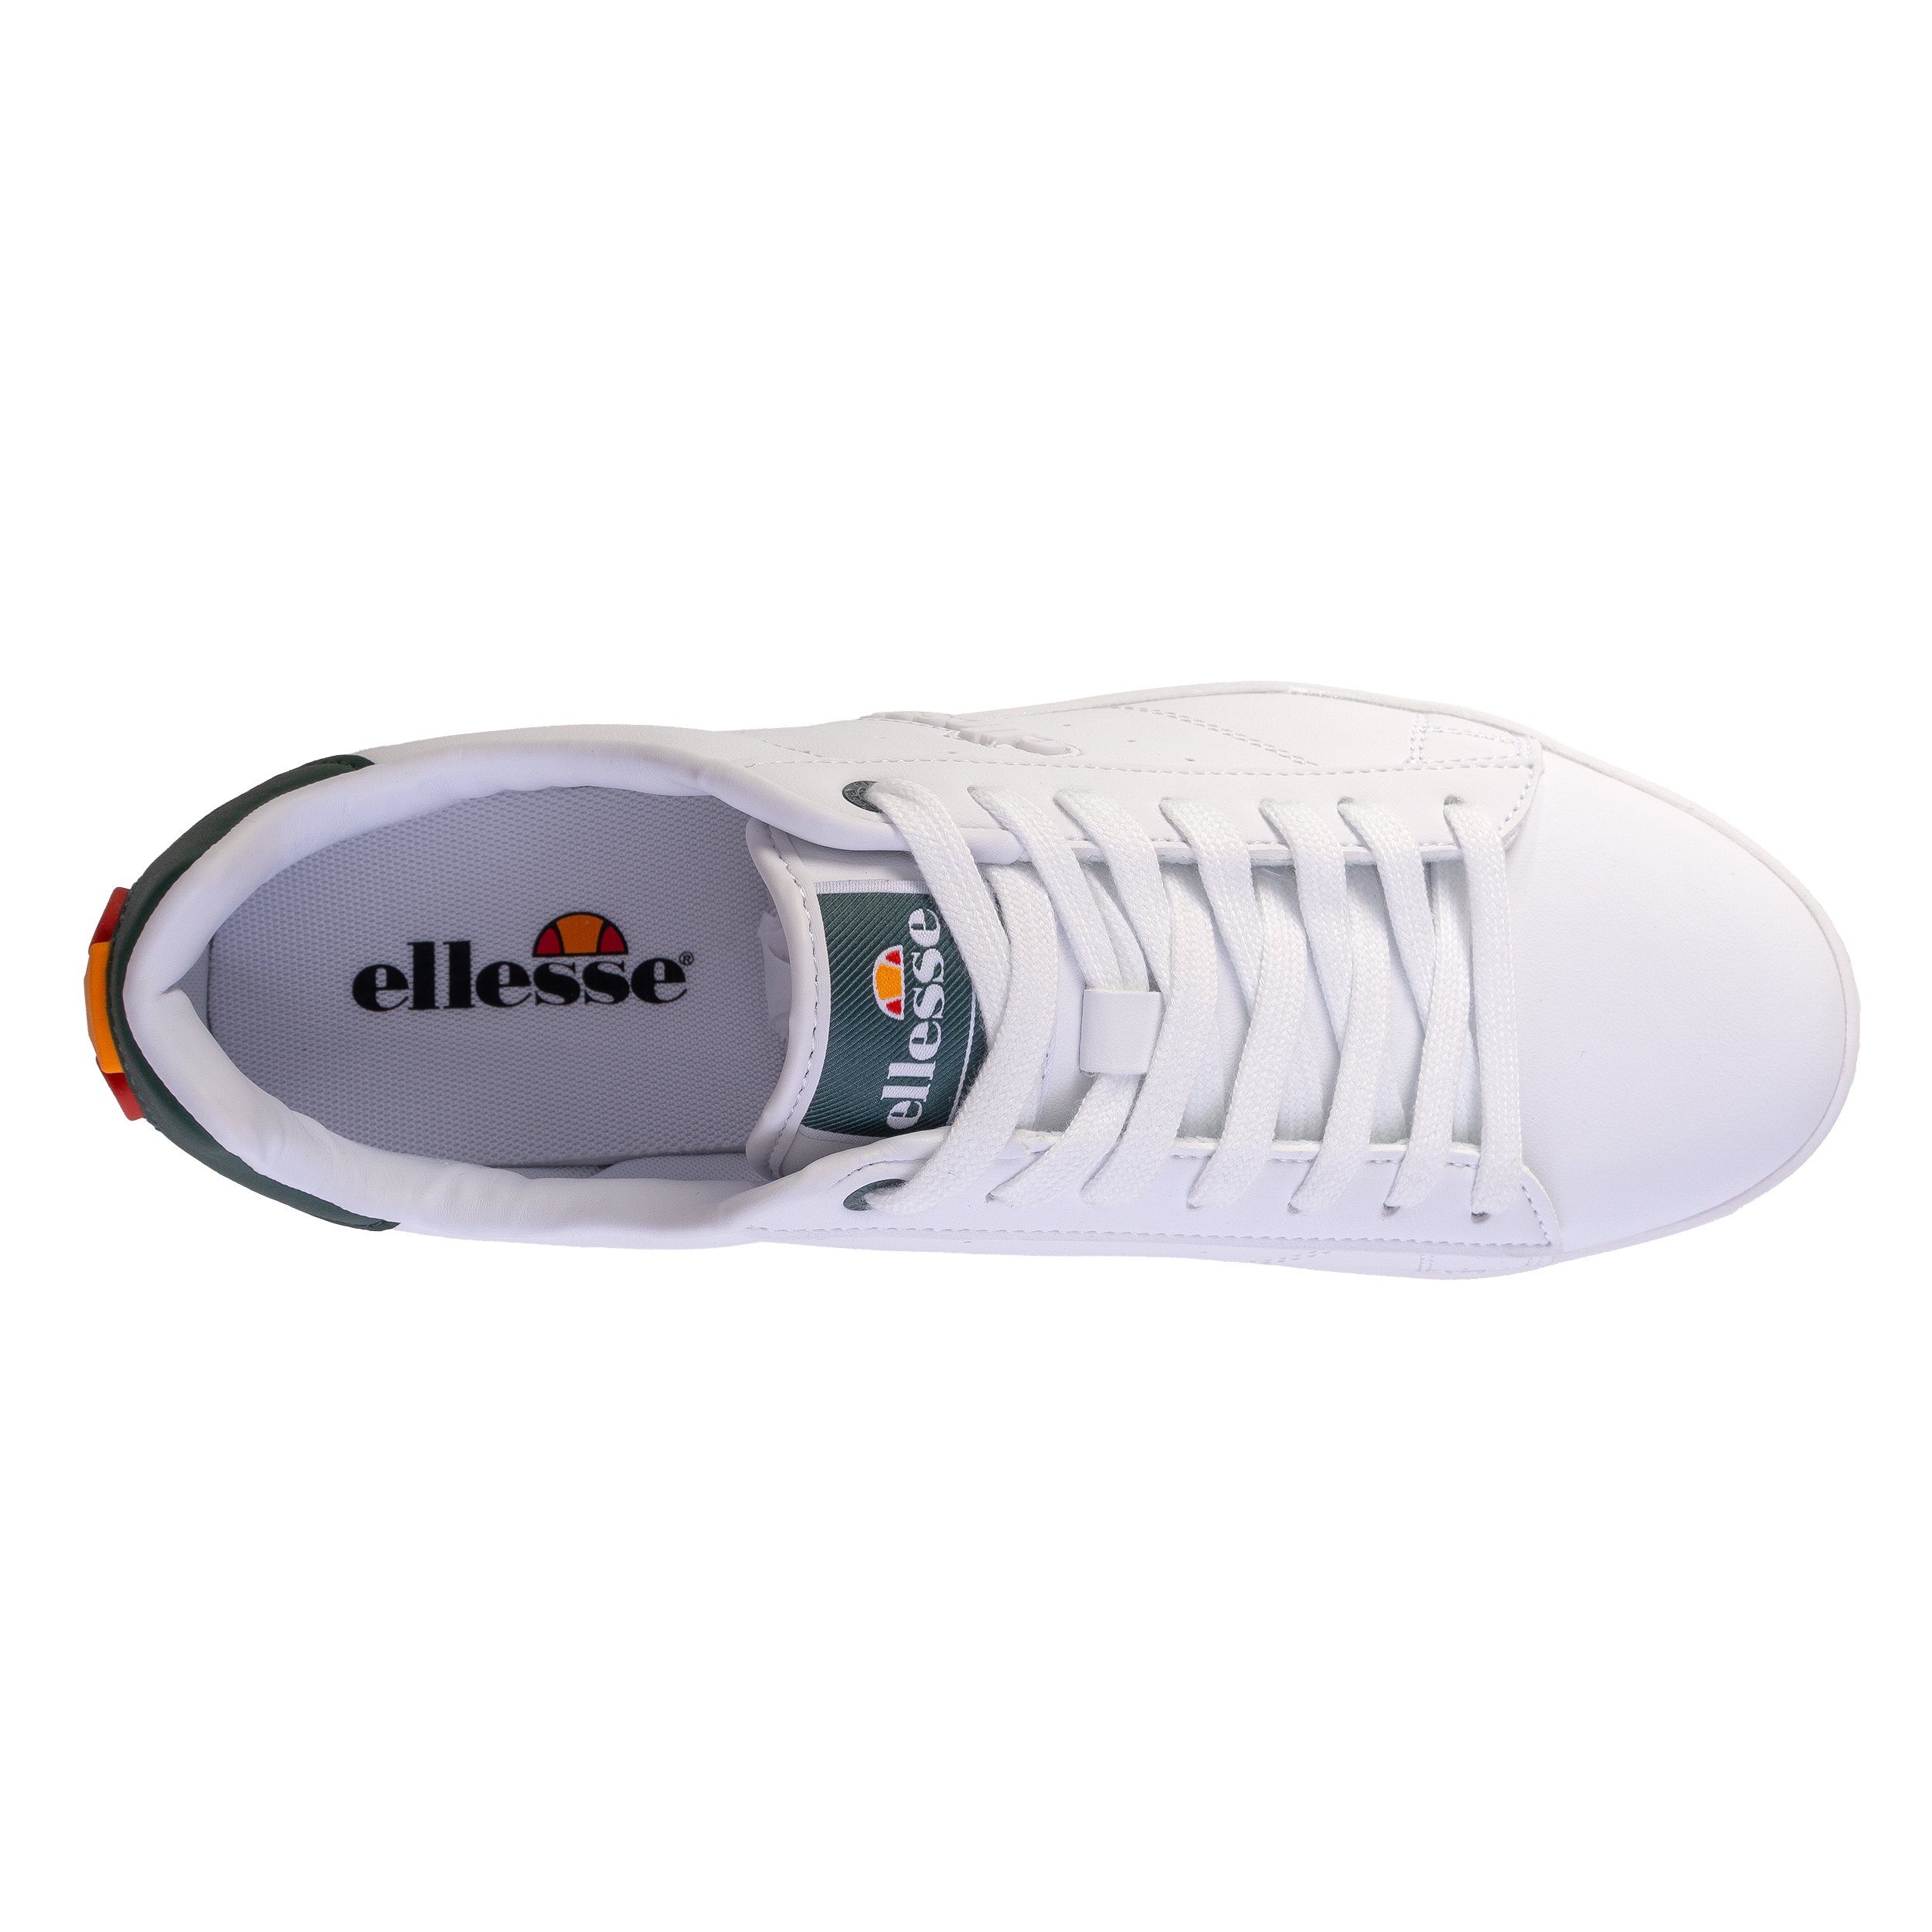 Ellesse Schuhe LS290 Cupsole Herren Sneaker white/dunkelgrün Ellesse Sneaker